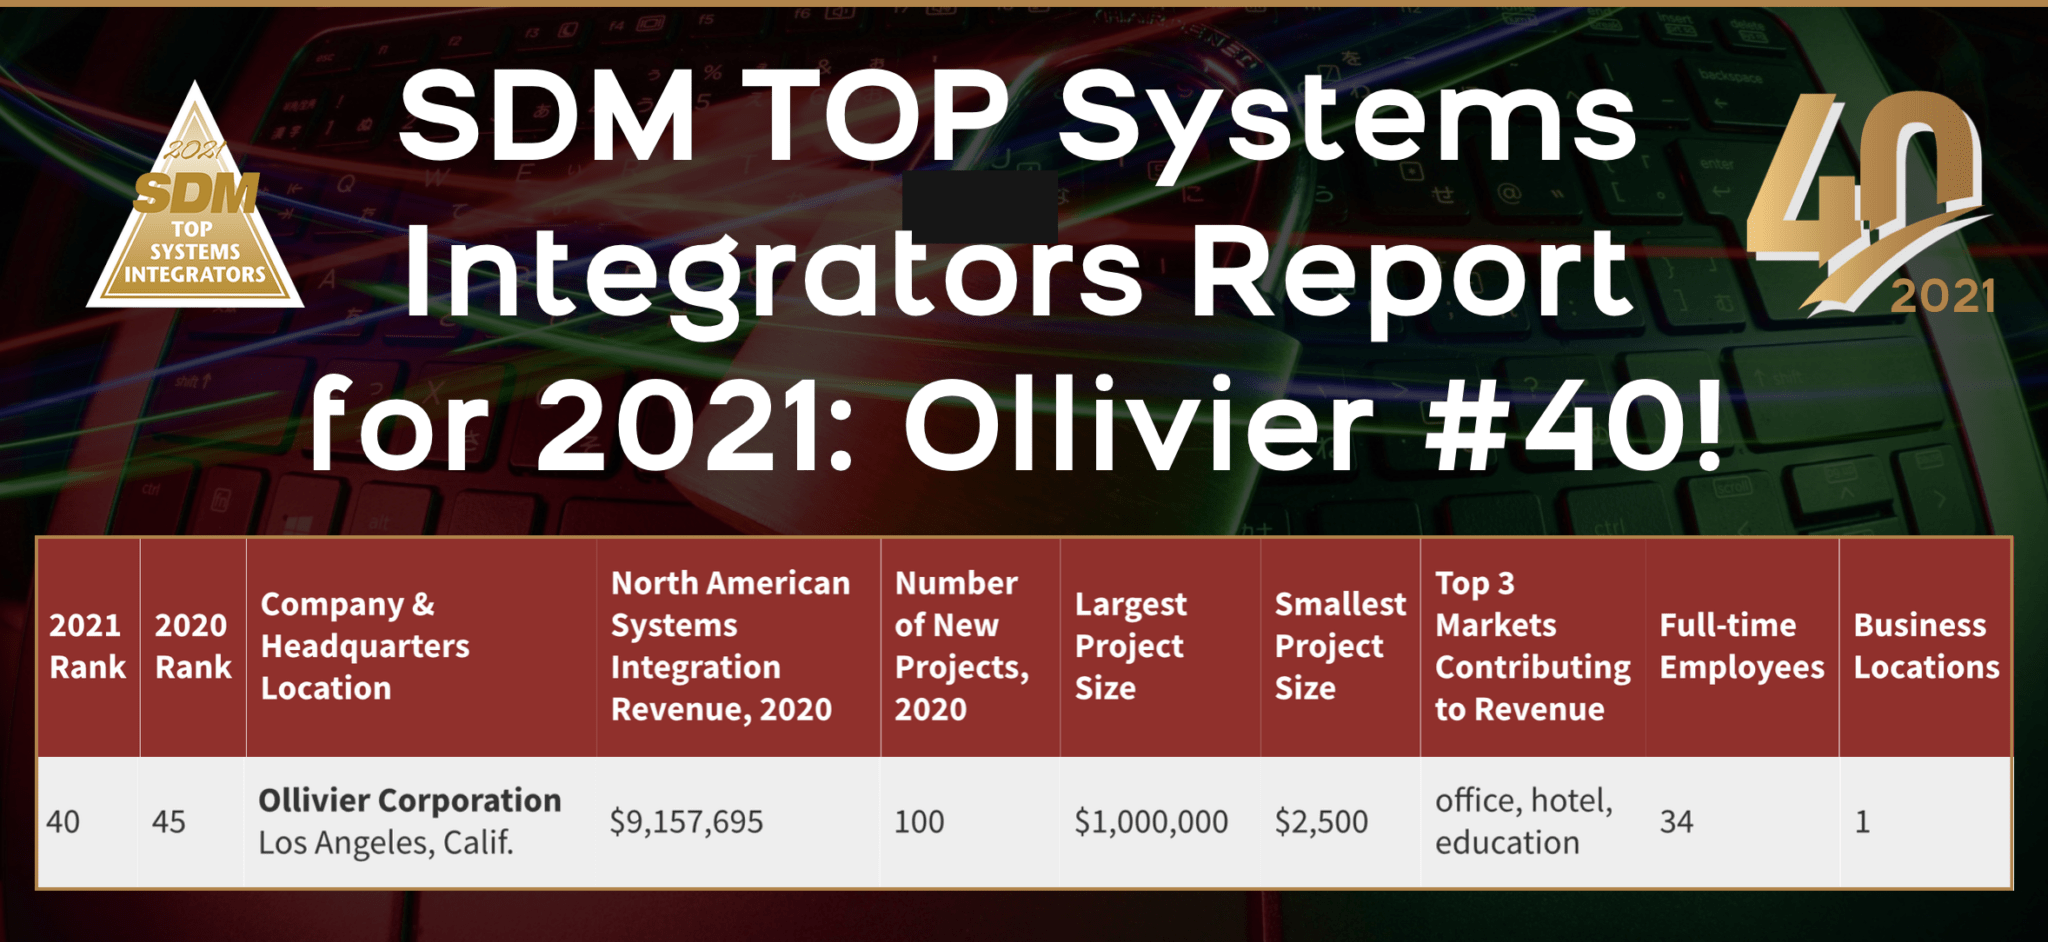 SDM TOP 100 System Integrators Report! Ollivier Corporation